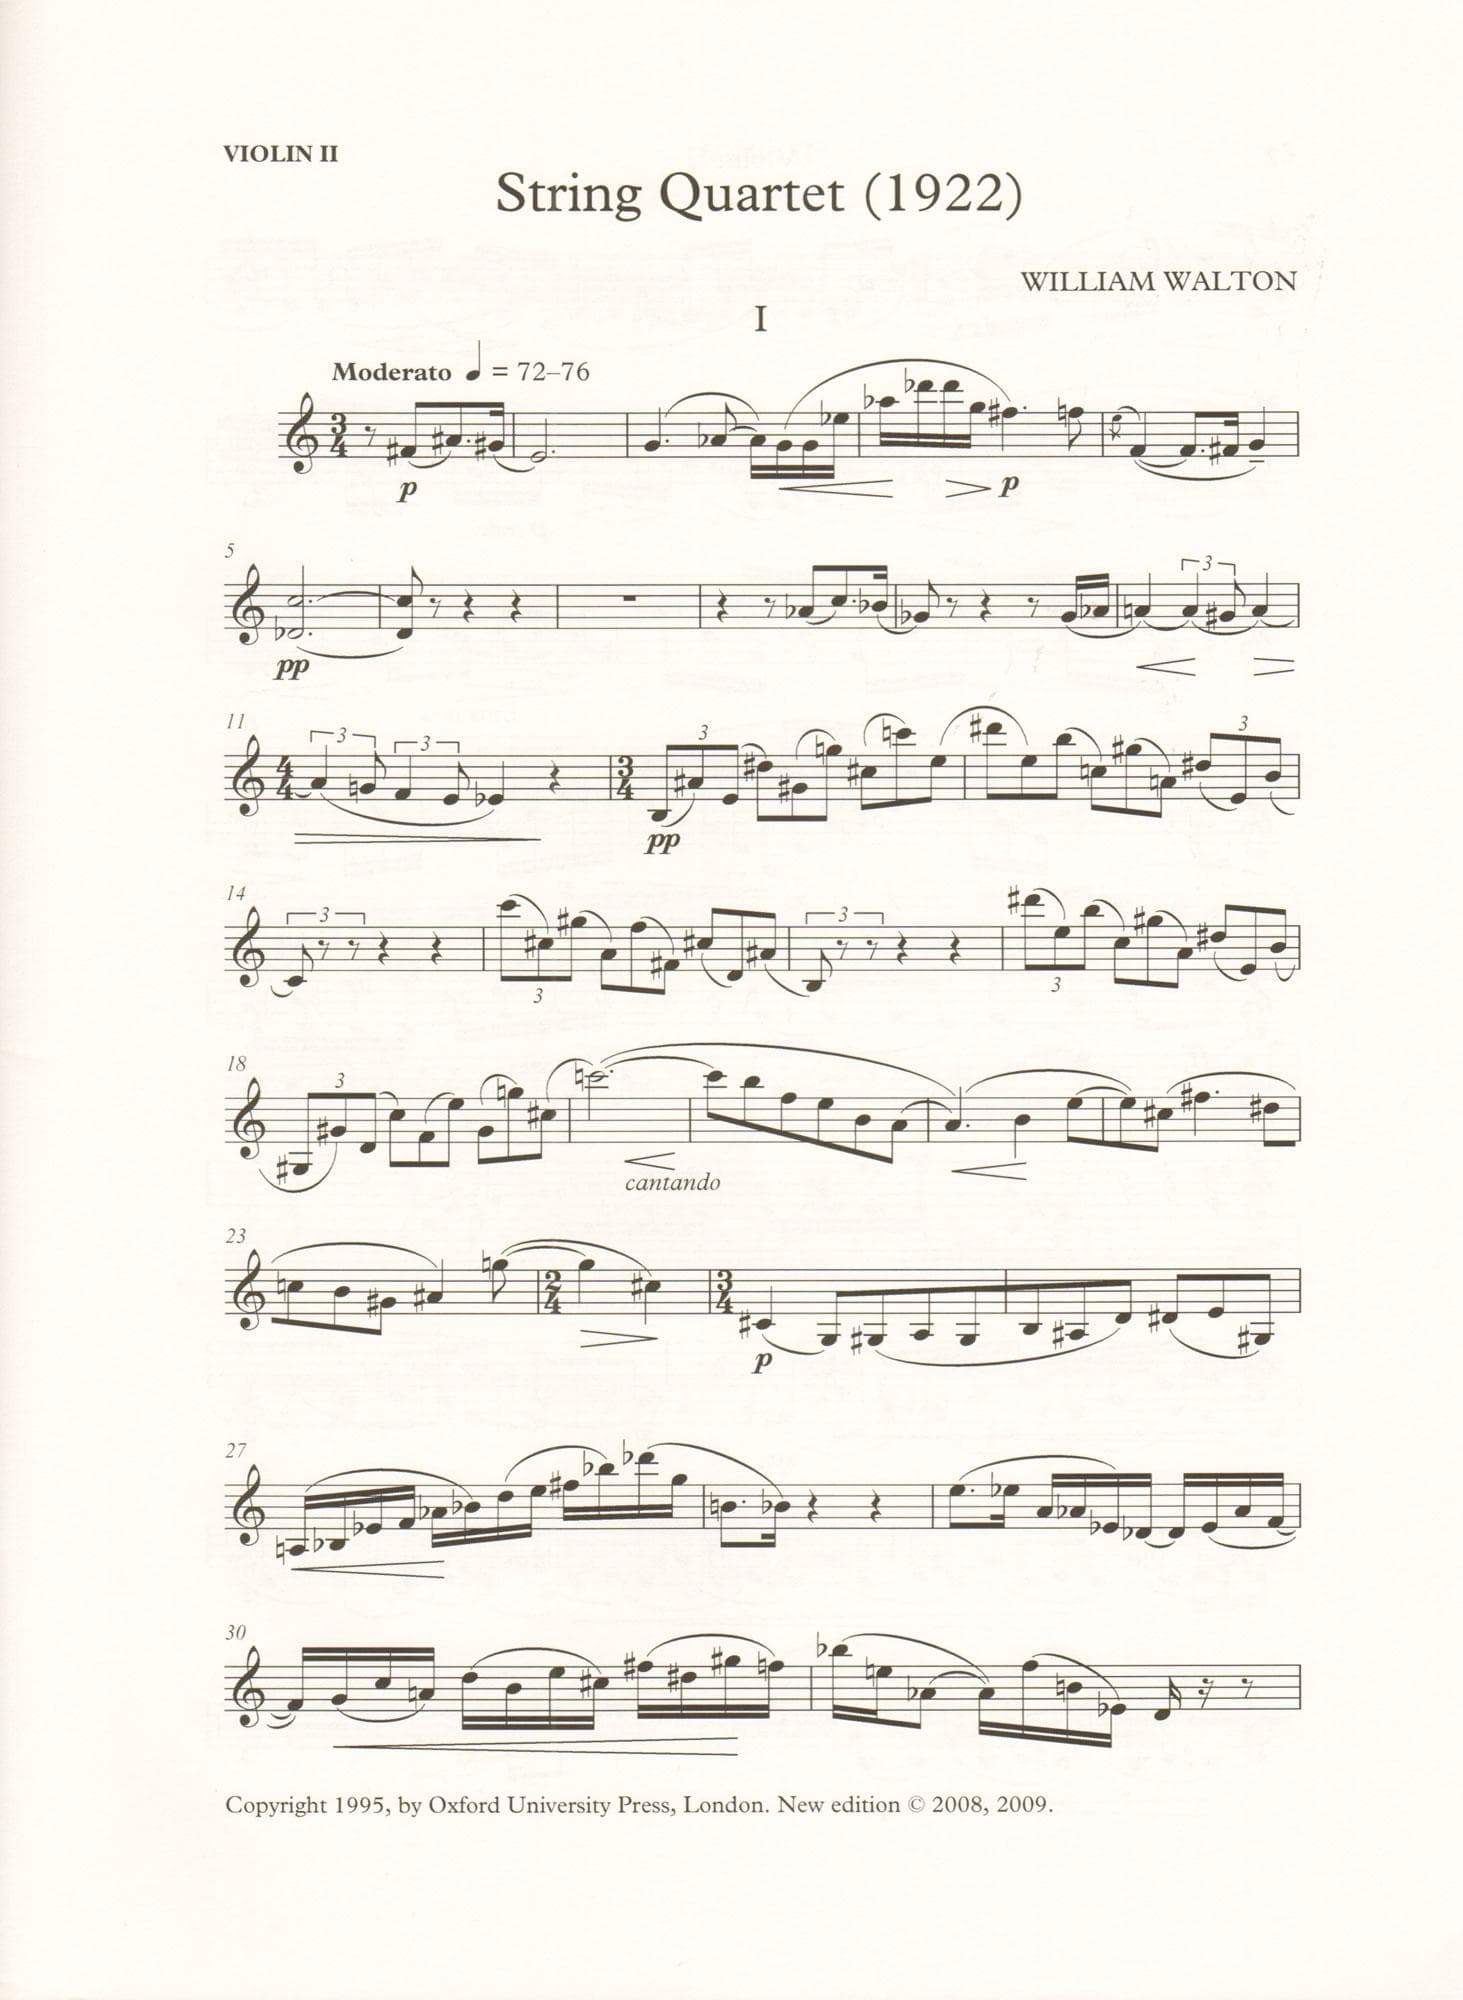 Walton, William - String Quartet (1922) - Set of Parts - edited by Hugh MacDonald - Oxford University Press